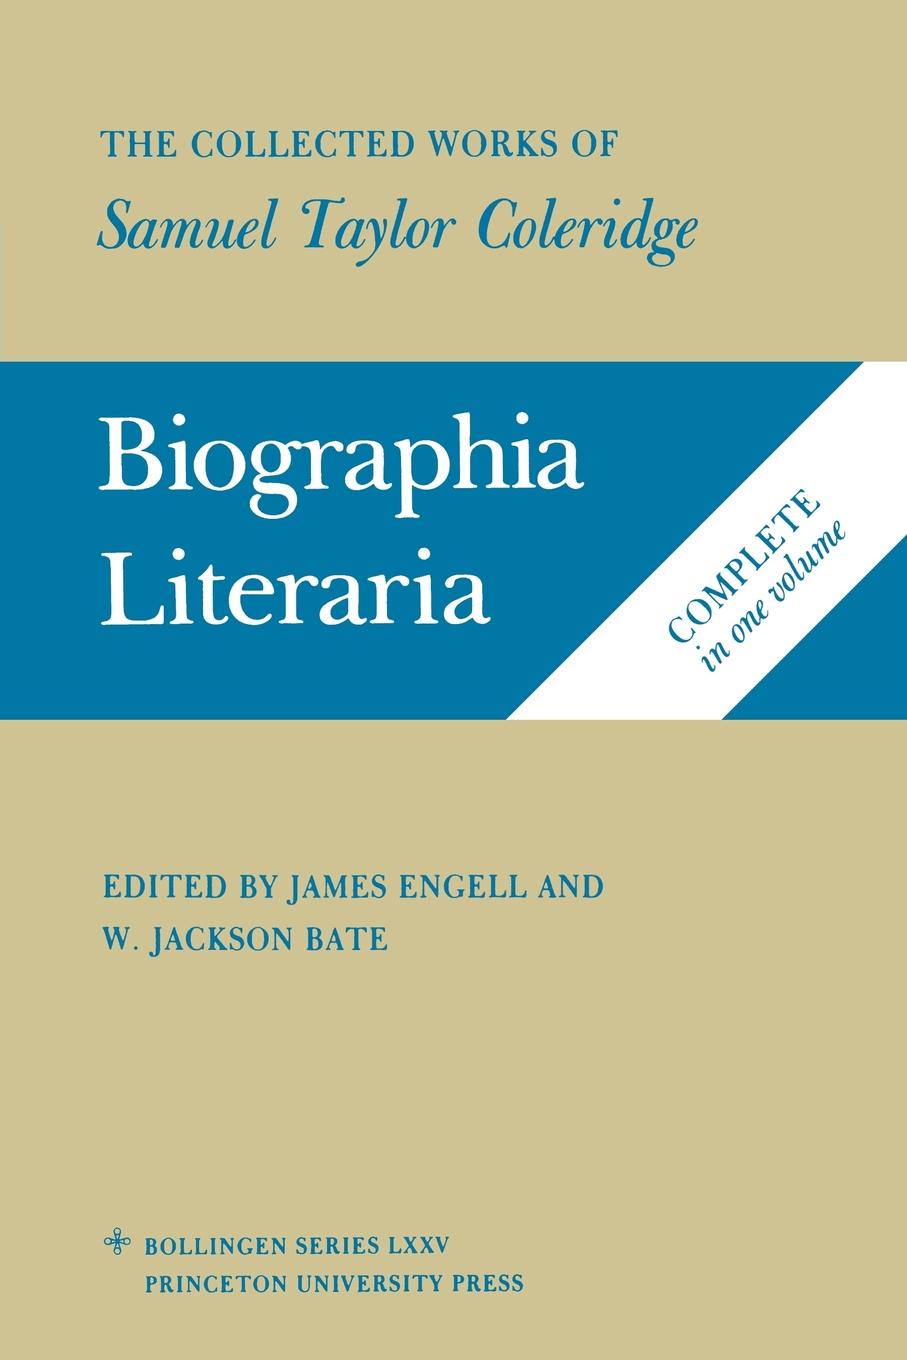 The Collected Works of Samuel Taylor Coleridge, Volume 7. Biographia Literaria. (Two volume set)